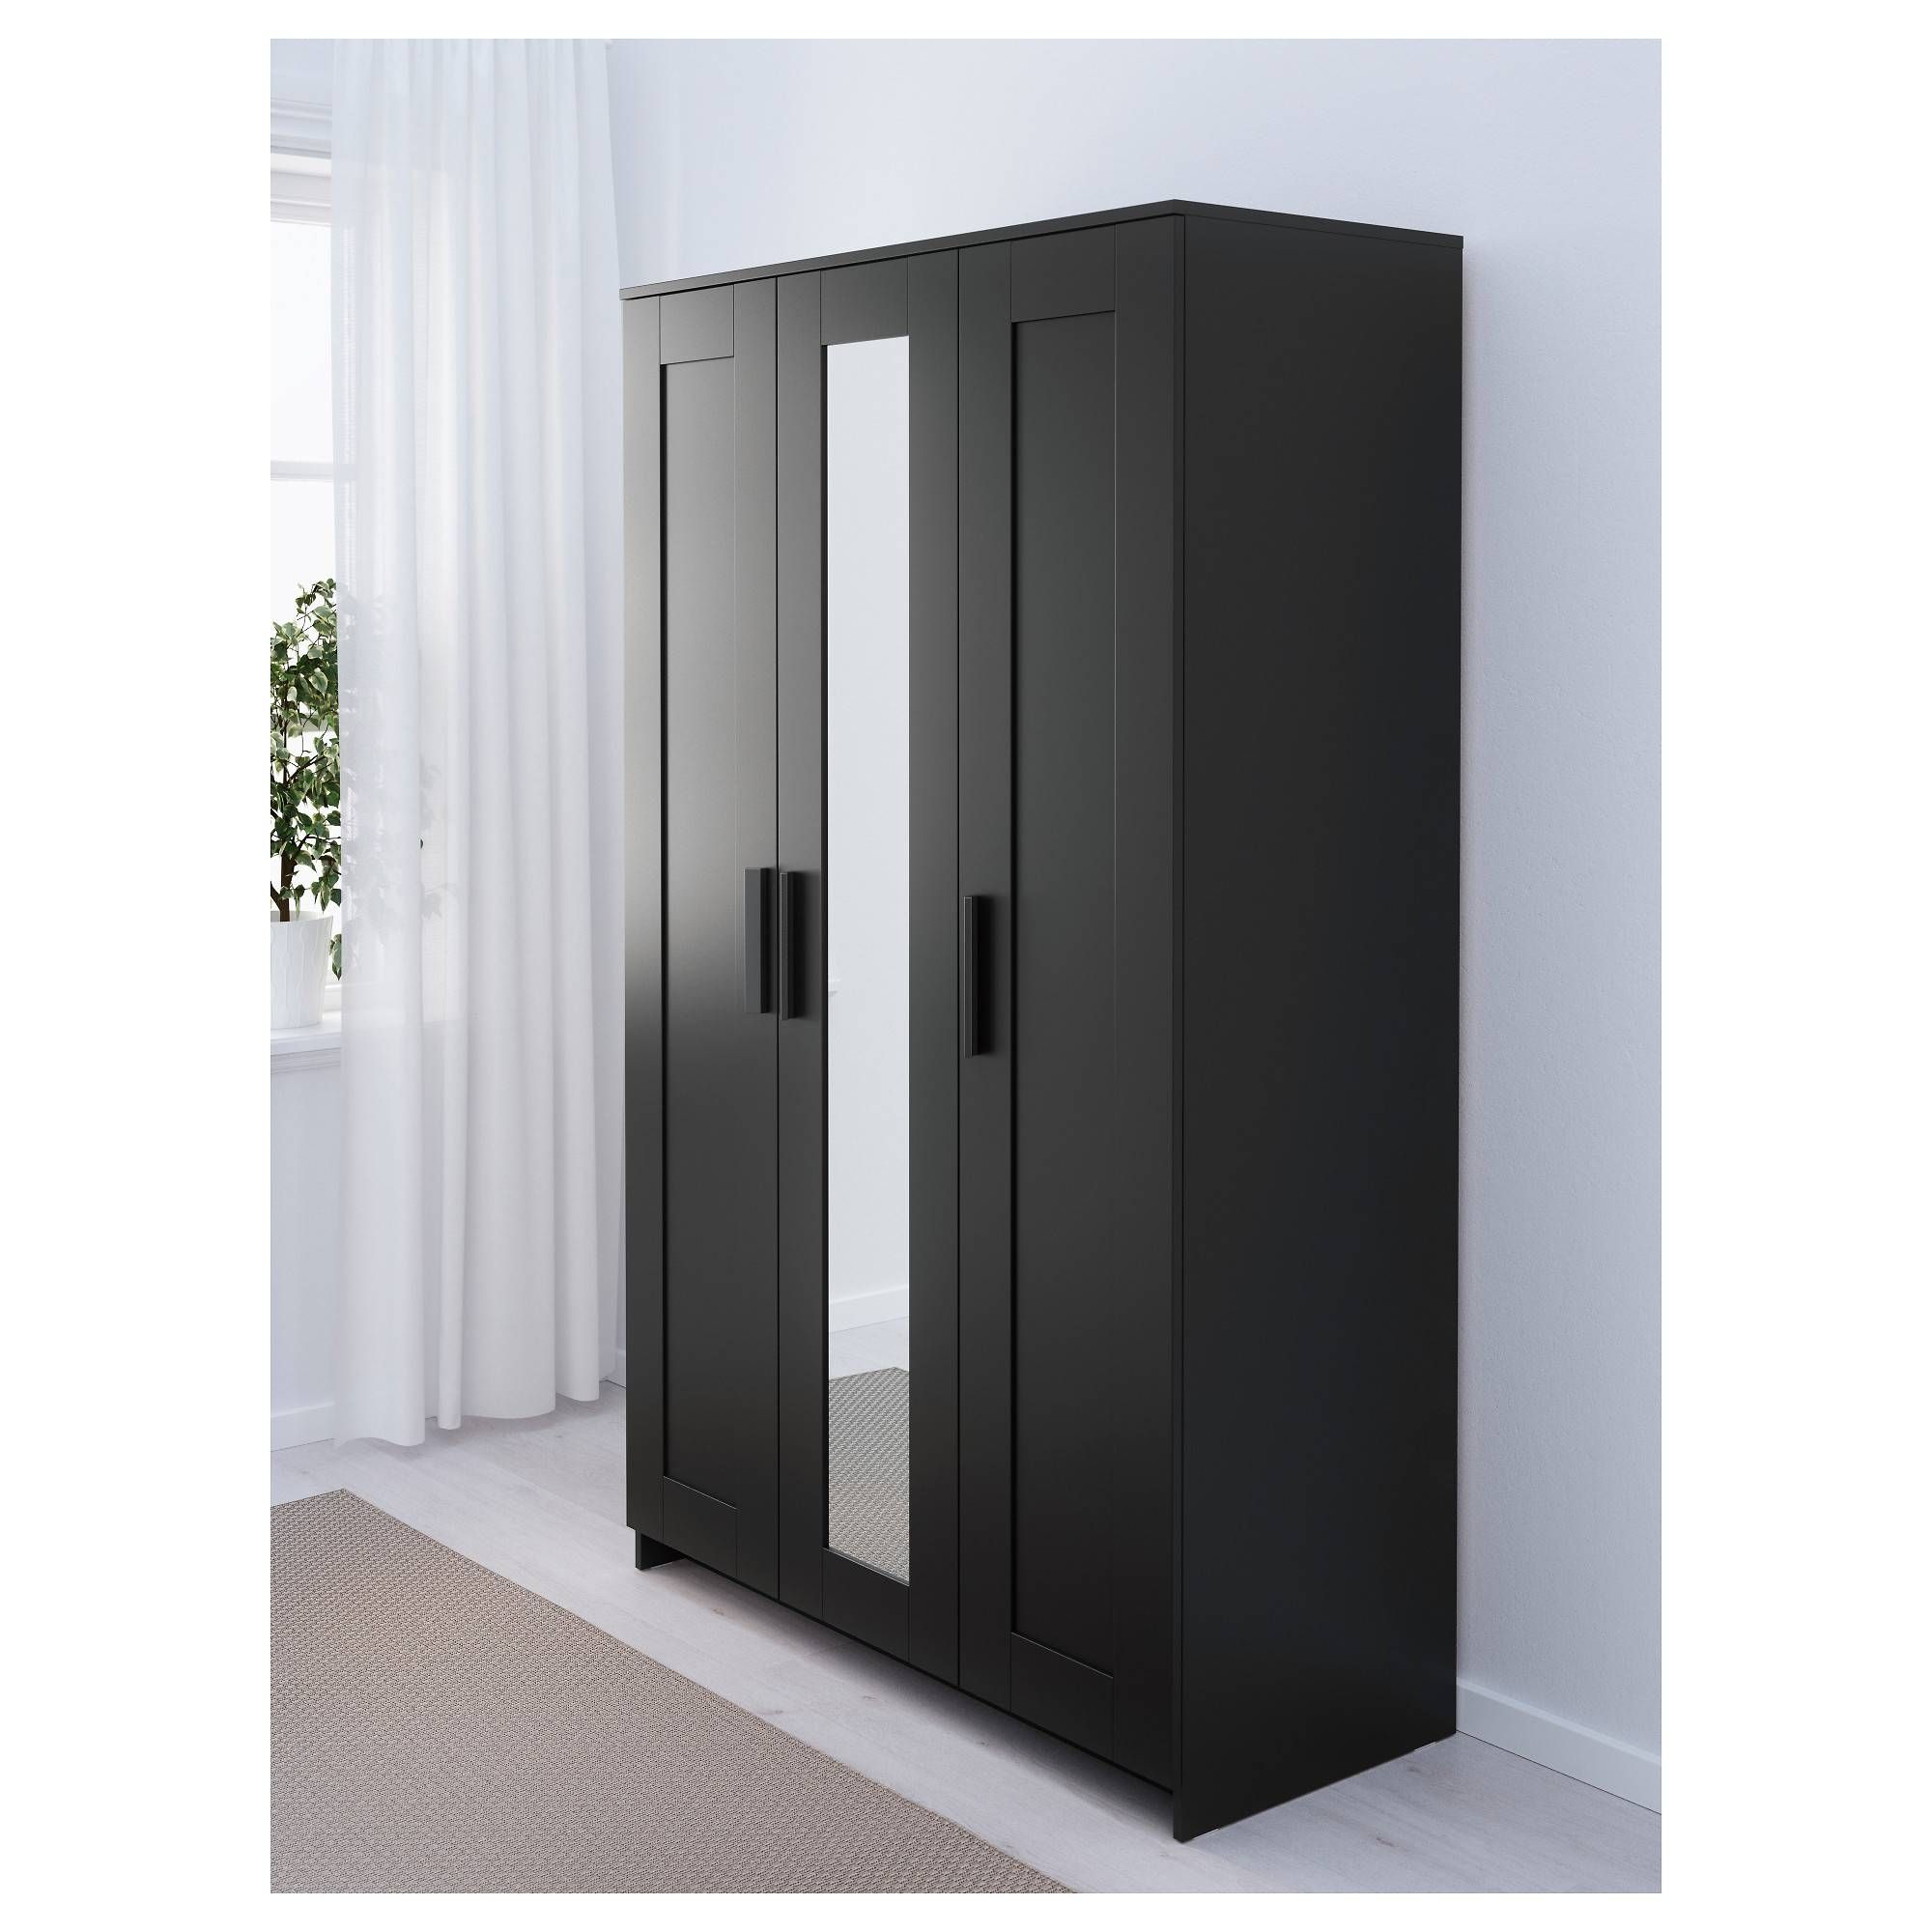 Brimnes Wardrobe With 3 Doors – White – Ikea For Dark Wood Wardrobes Ikea (View 10 of 30)